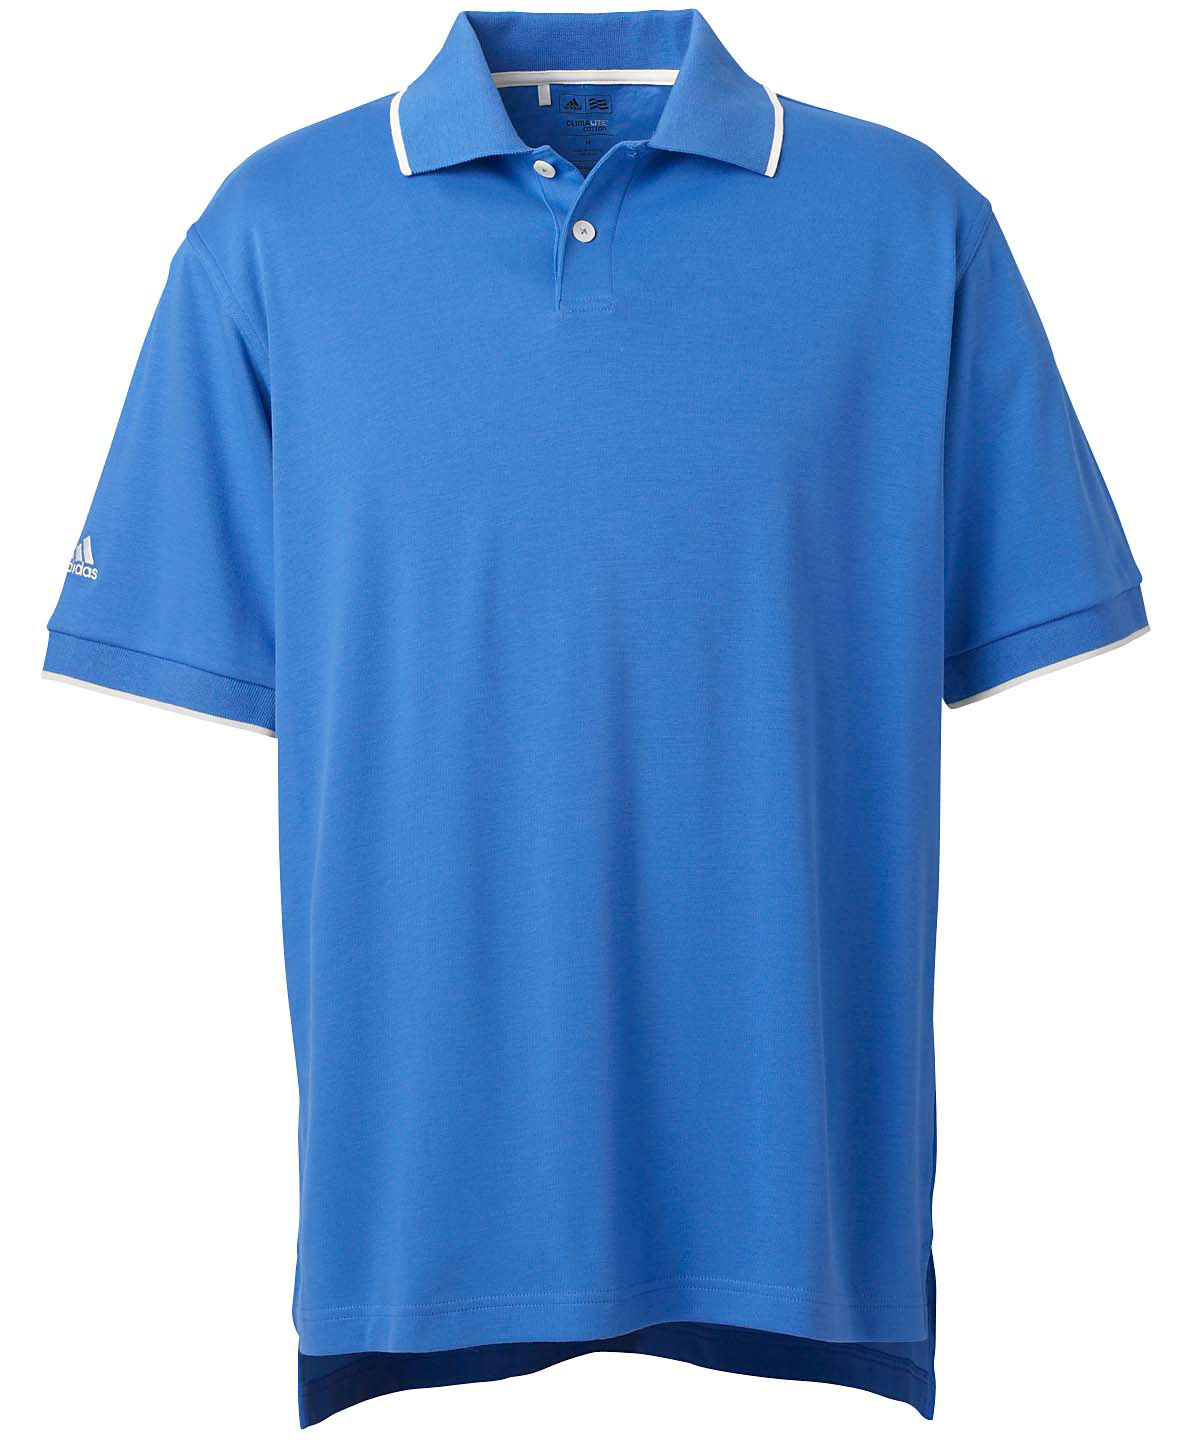 Custom Adidas Golf Apparel and Custom Adidas Golf Shirts - ClipArt Best ...